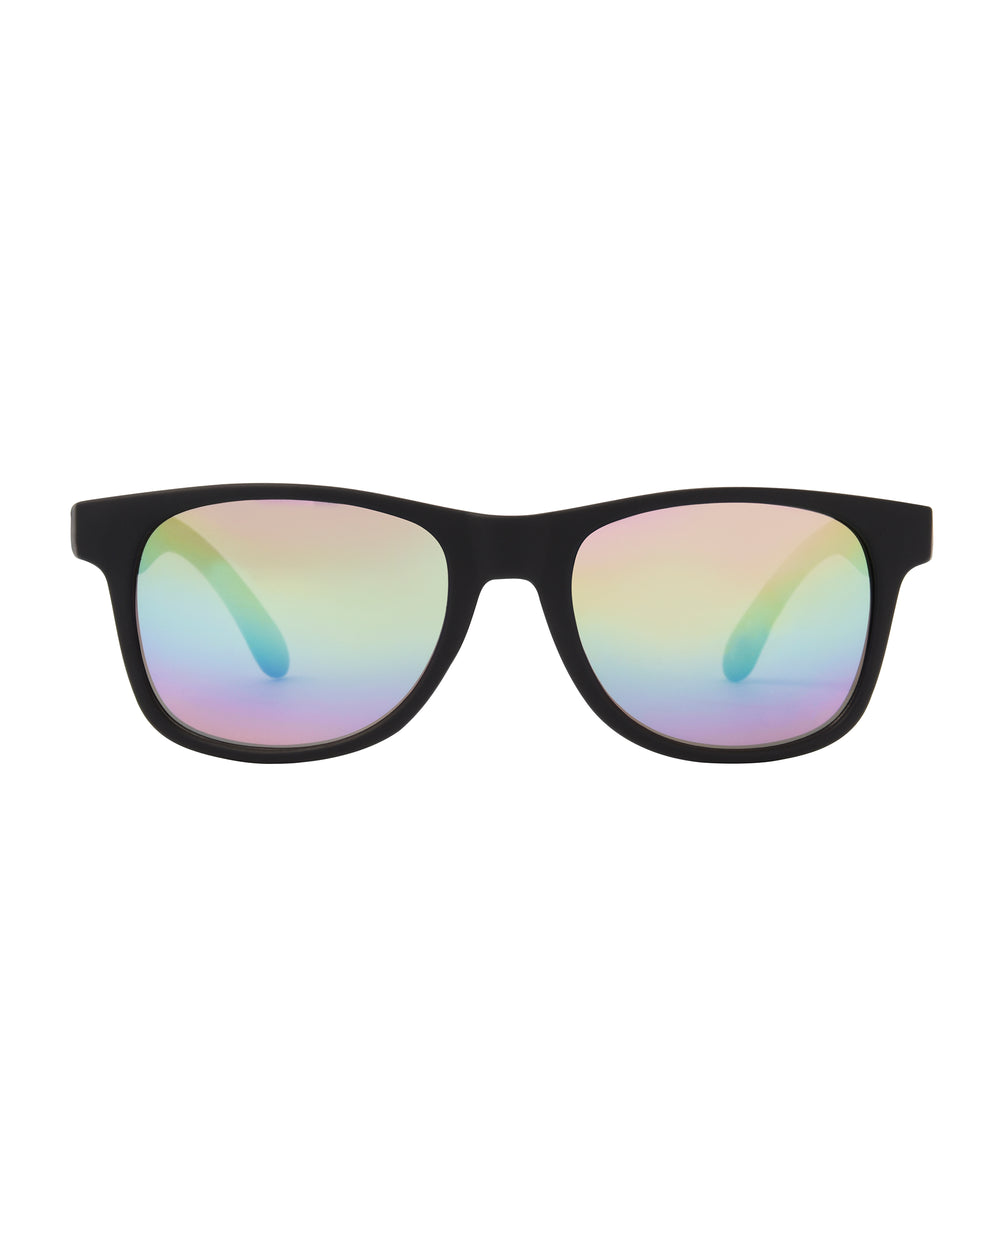 Share 208+ rainbow sunglasses for men